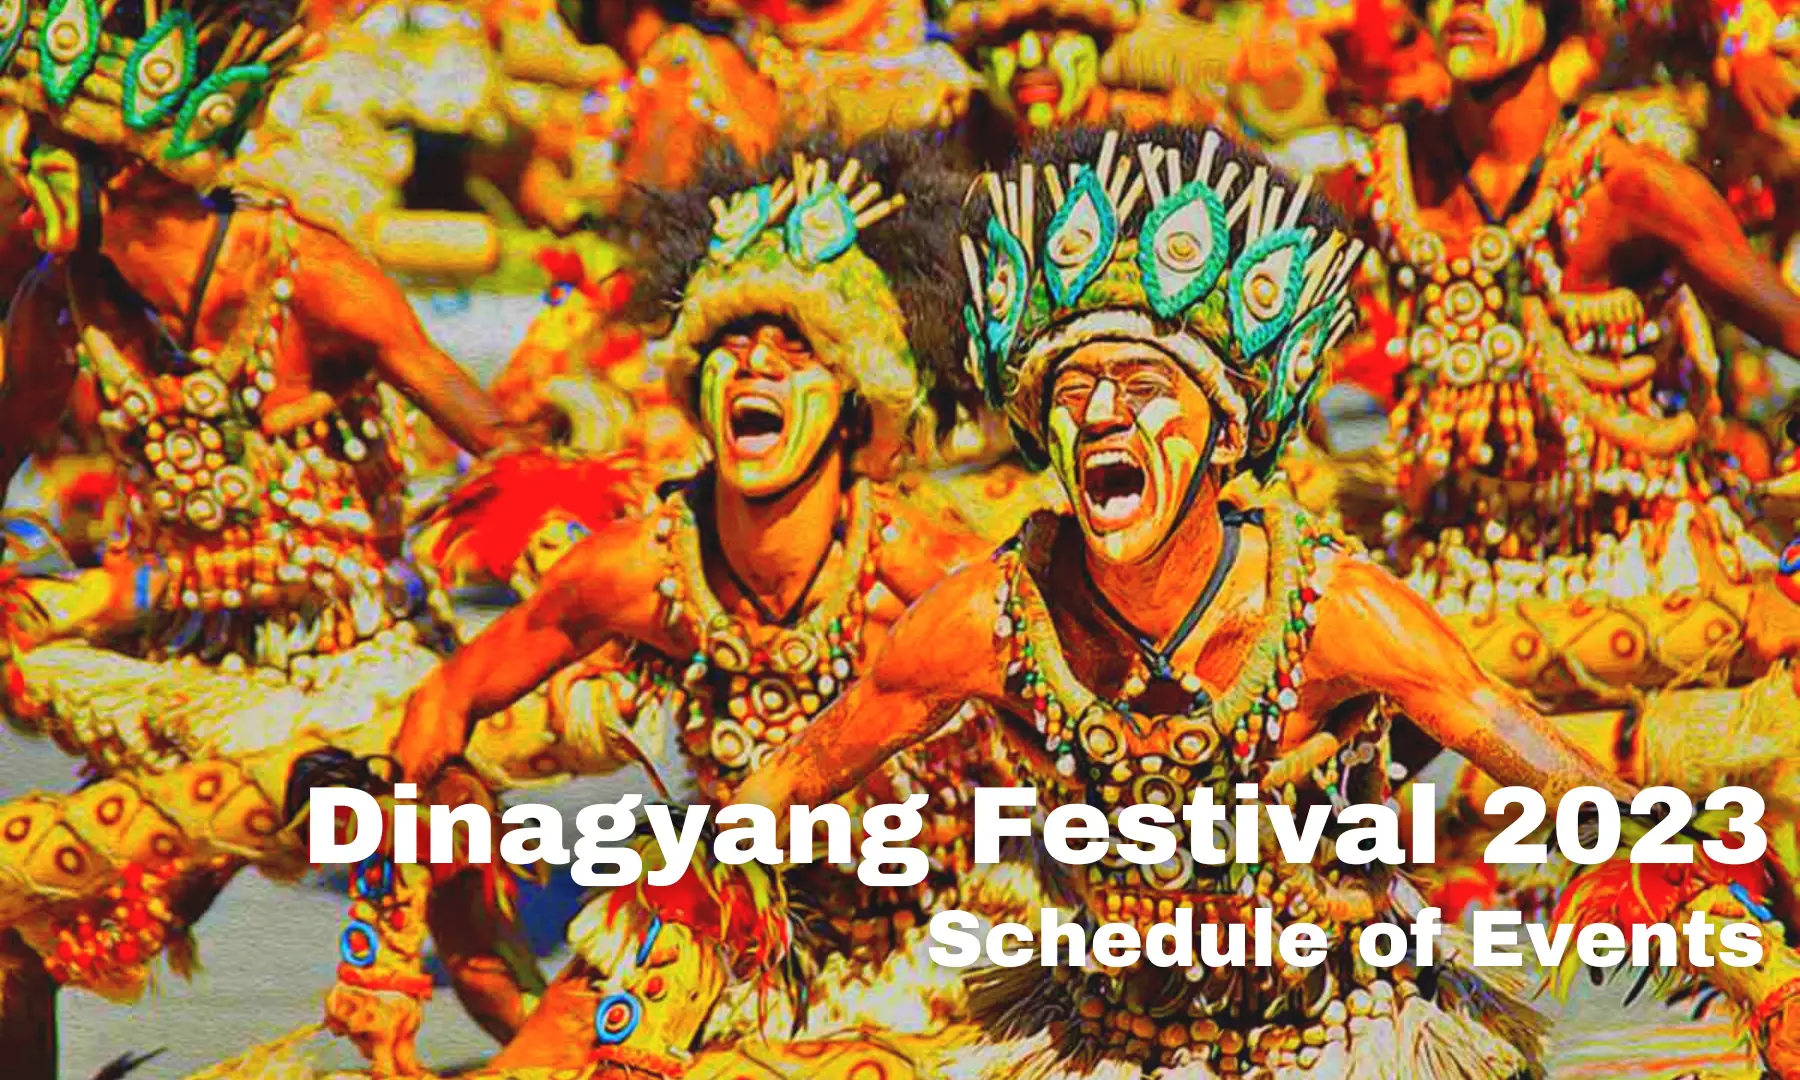 Festival Highlights for Iloilo Dinagyang Festival 2023